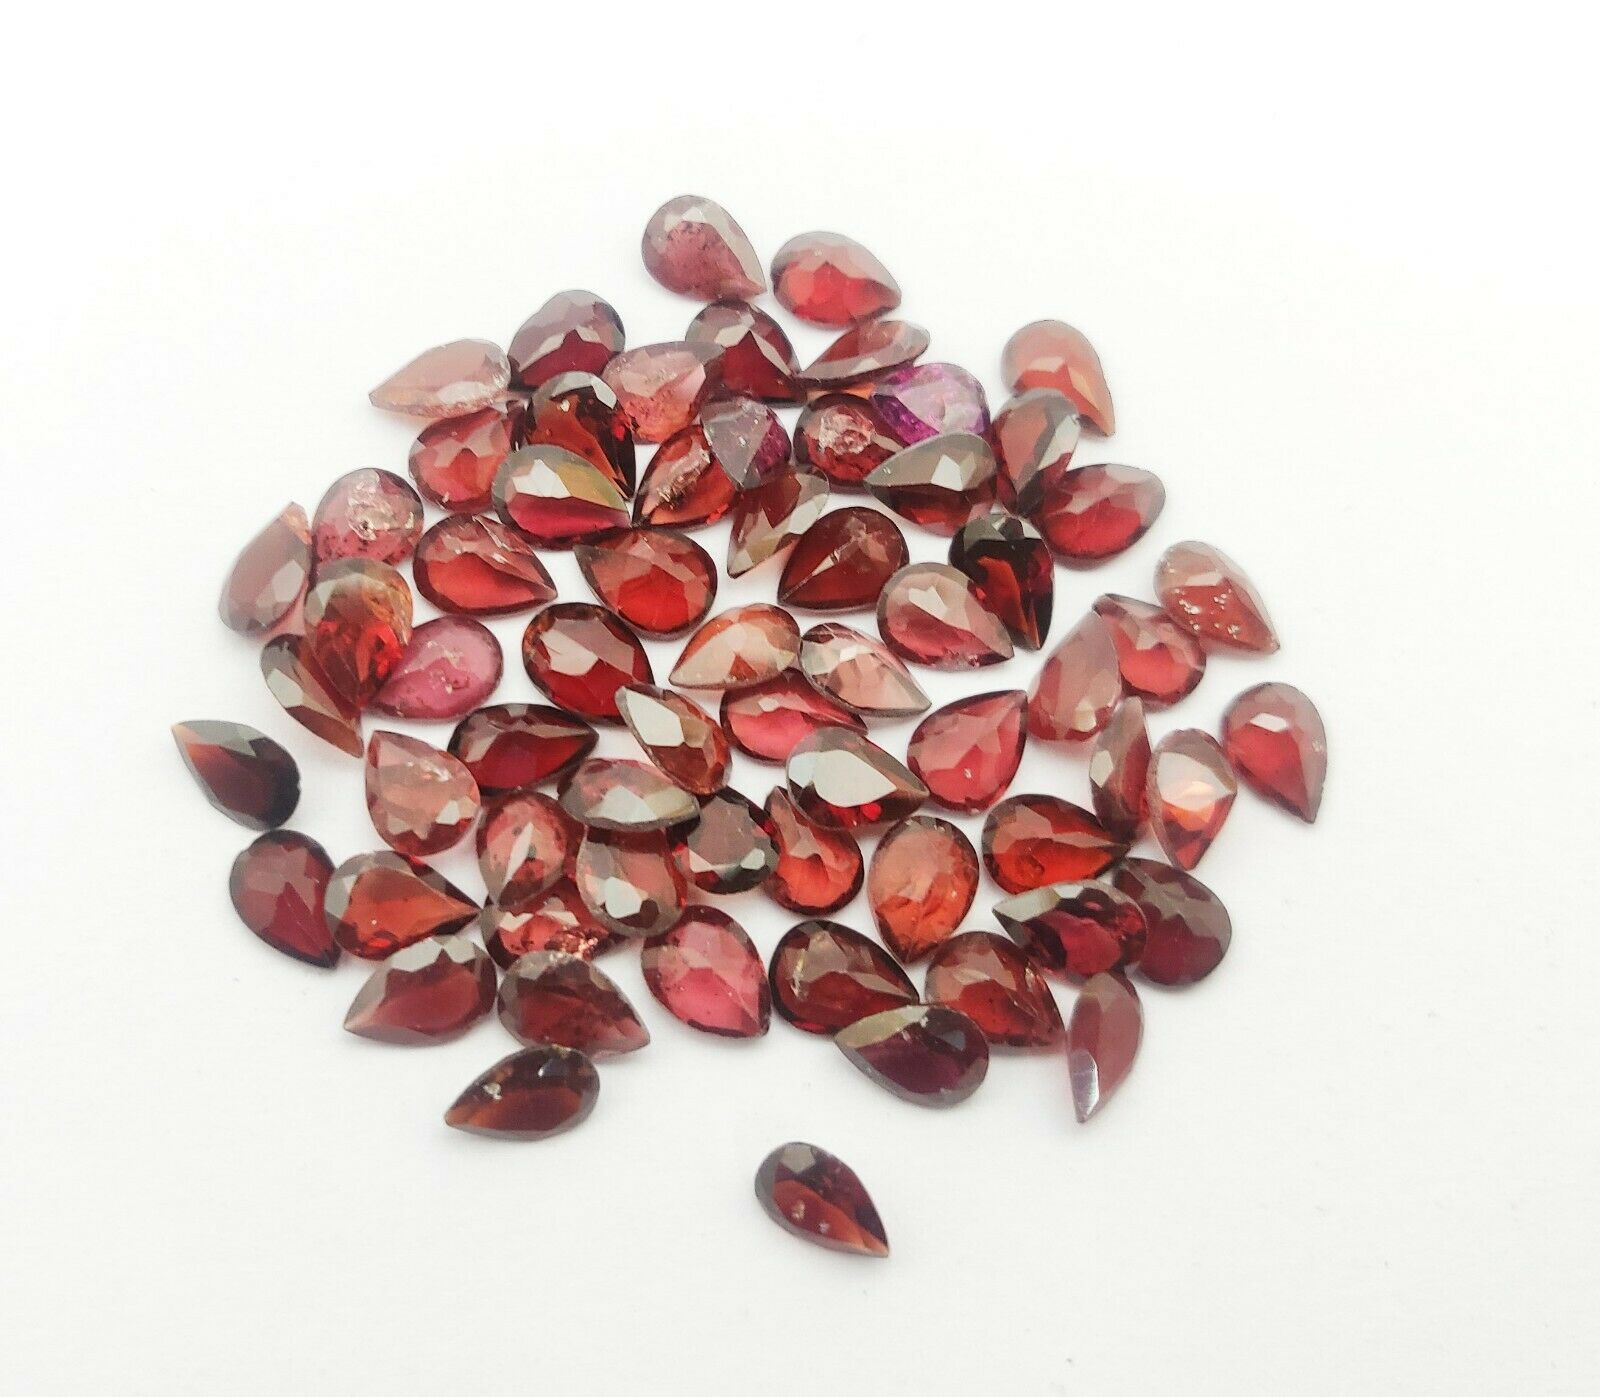 30 Ct Natural Garnet Pear Cut Loose Gemstone Lot 42 Pcs 5*7 Mm